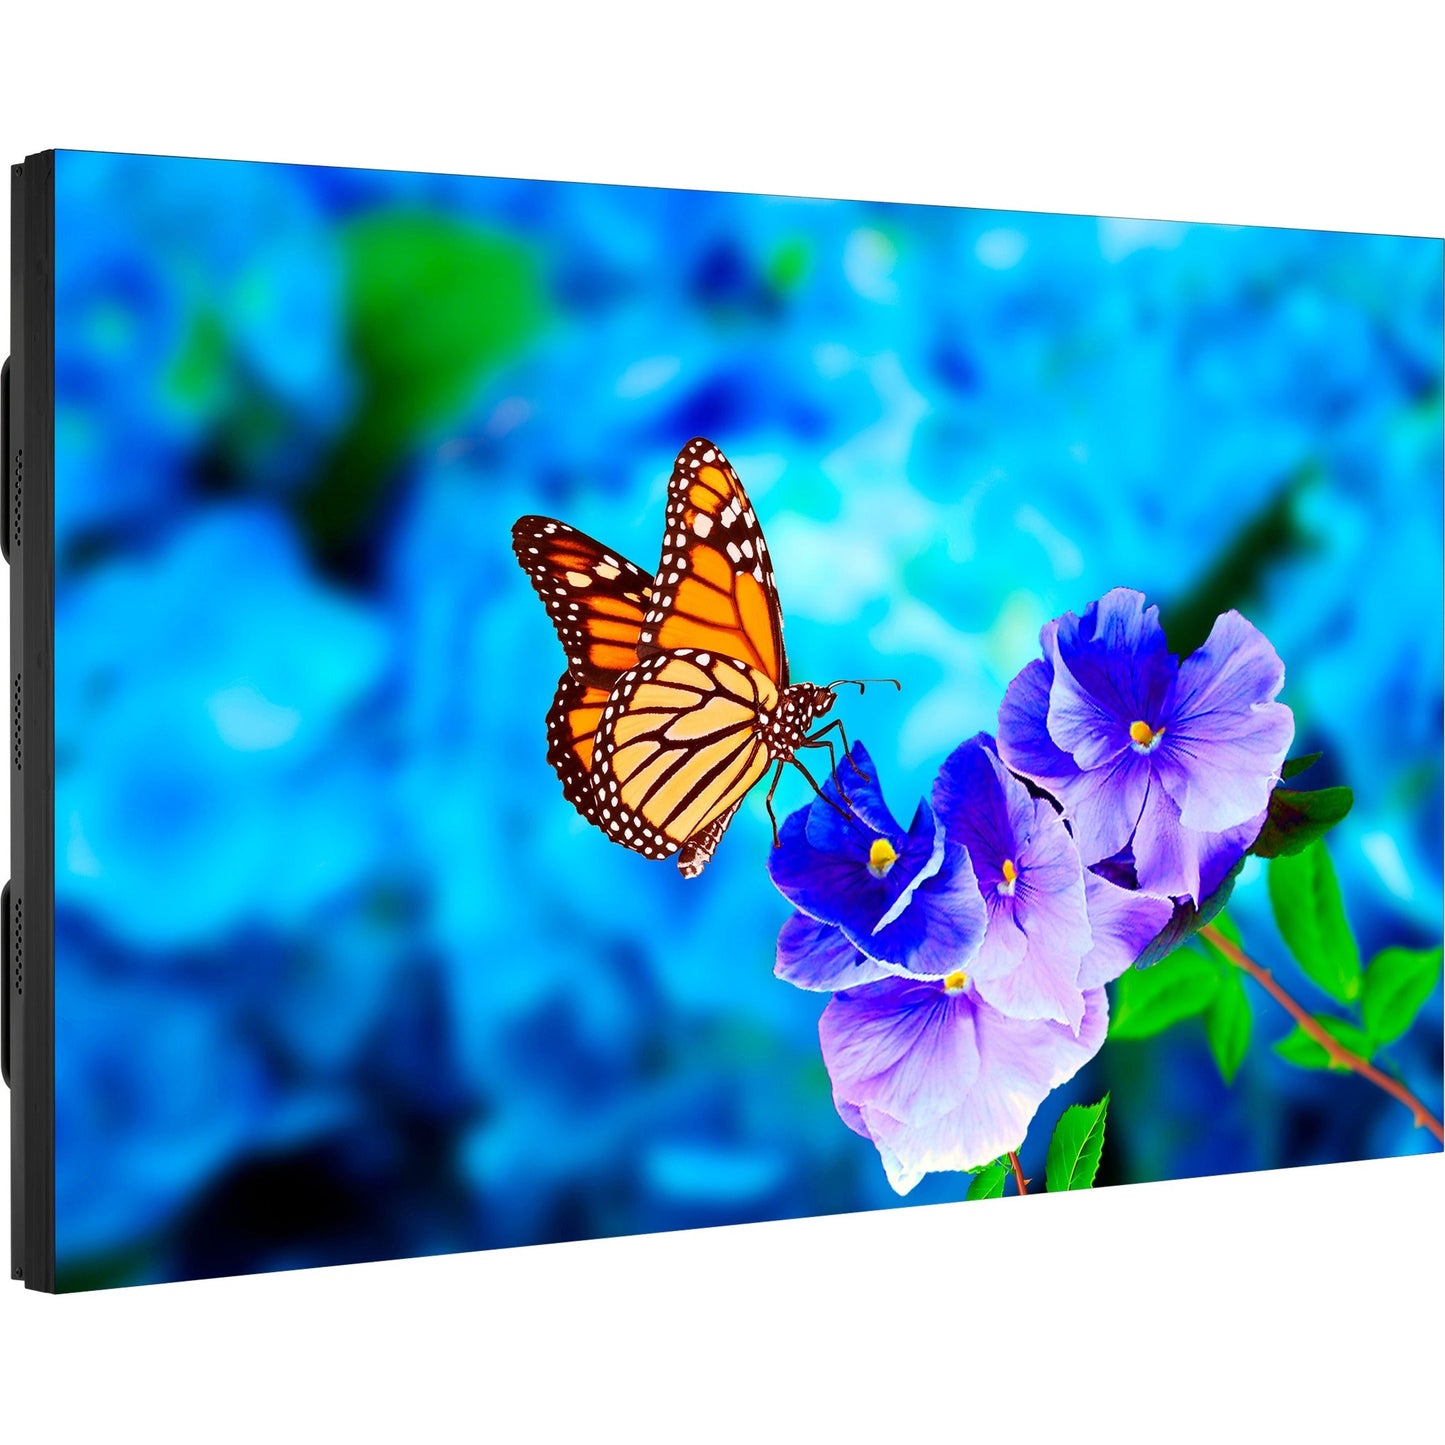 NEC Display 55" LED Backlit 0.88mm Ultra-Narrow Bezel 2x2 Video Wall Bundle